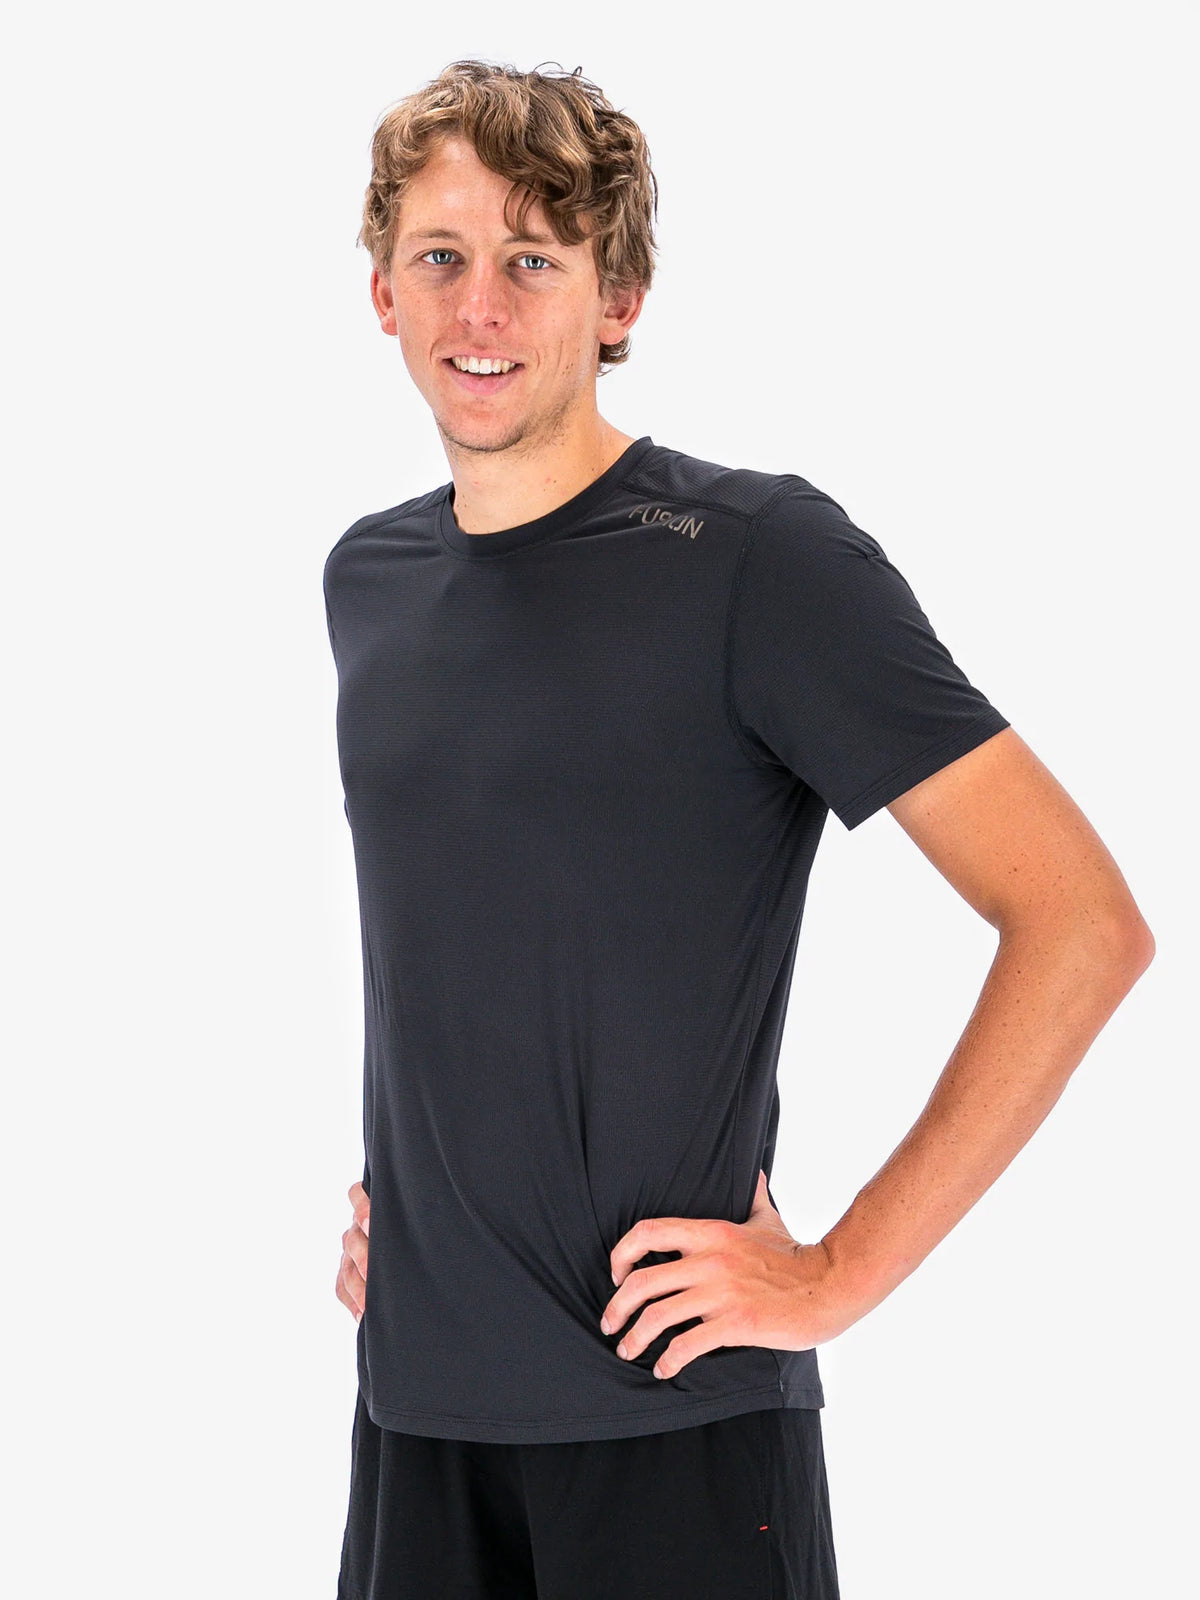 Mens SLi T-shirt black, super lightweight T-shirt for running